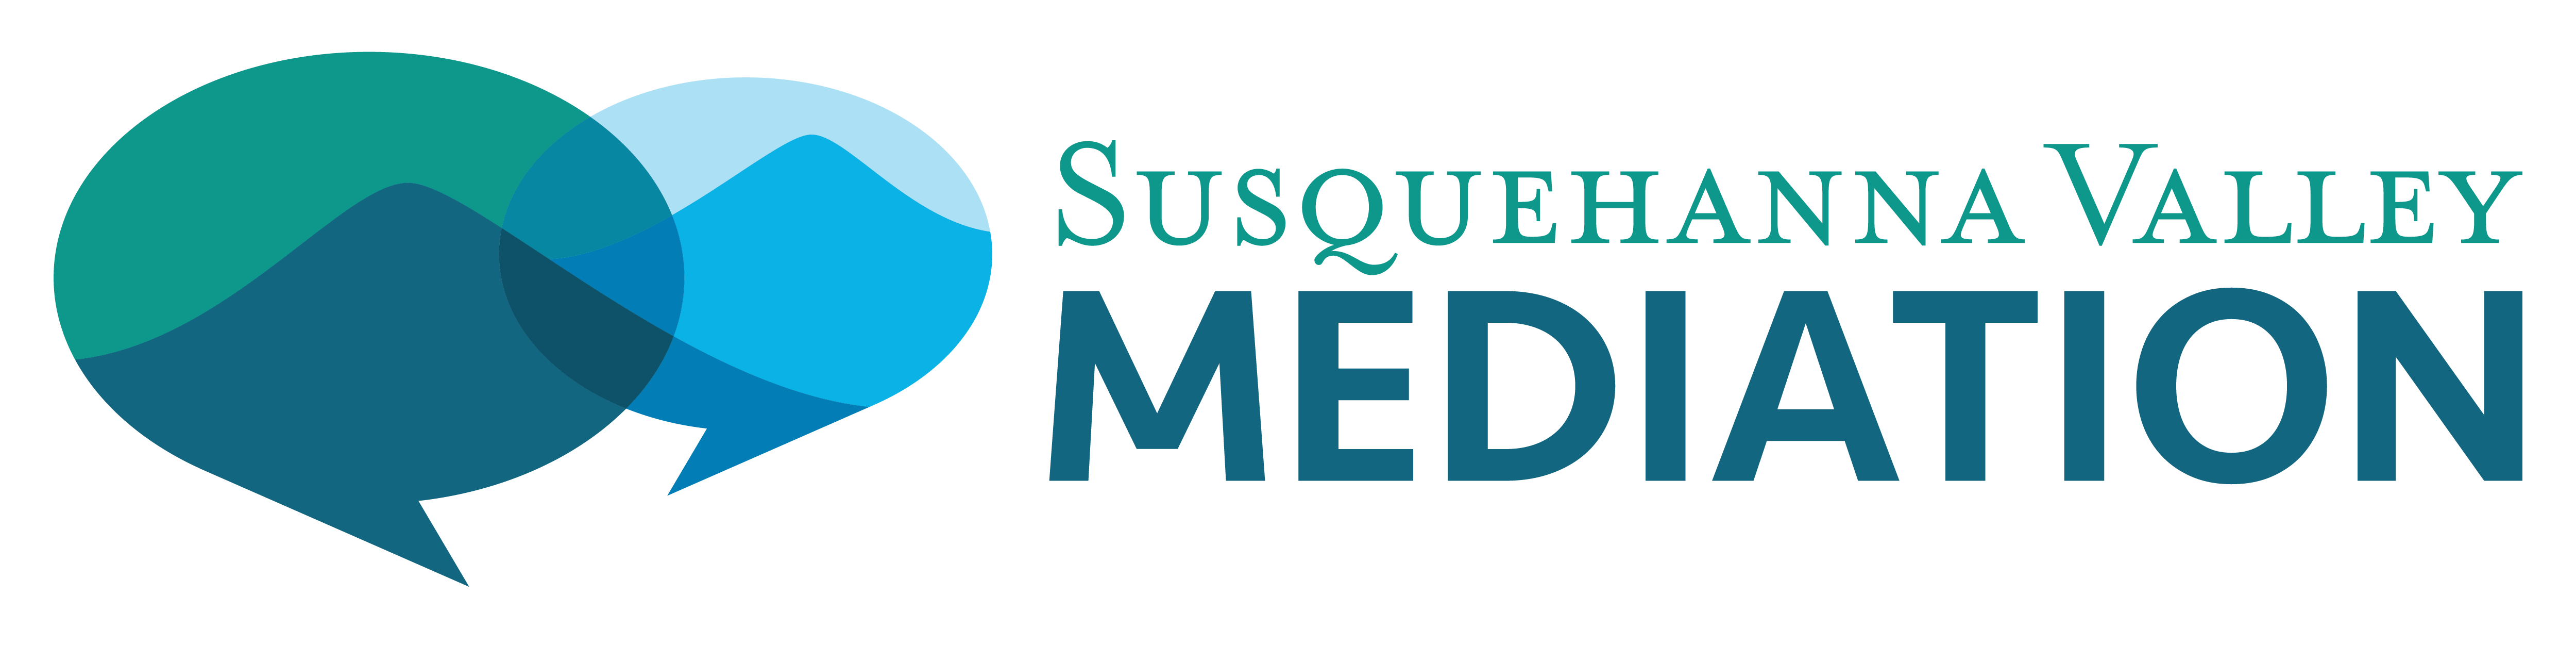 Susquehanna Valley Mediation, Inc. logo